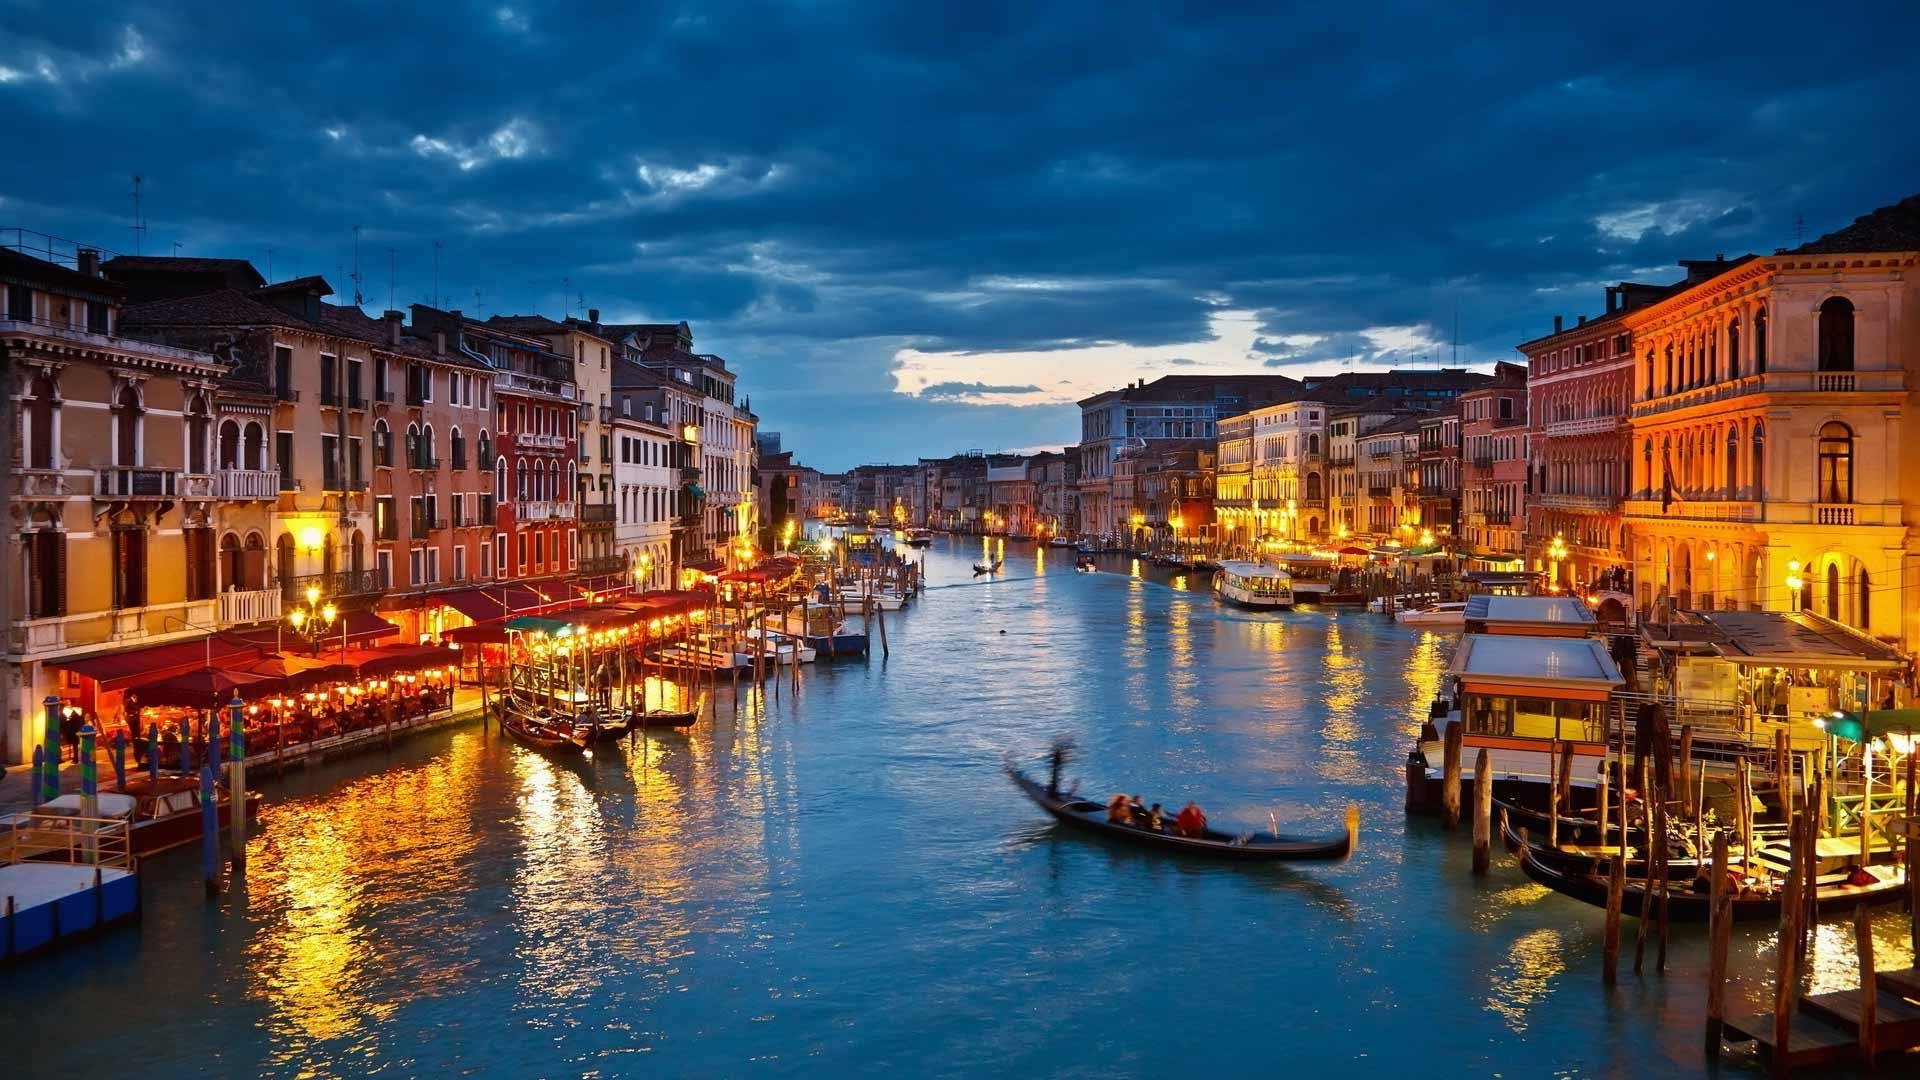 Europe's Famous City Venice Italy Wallpaper